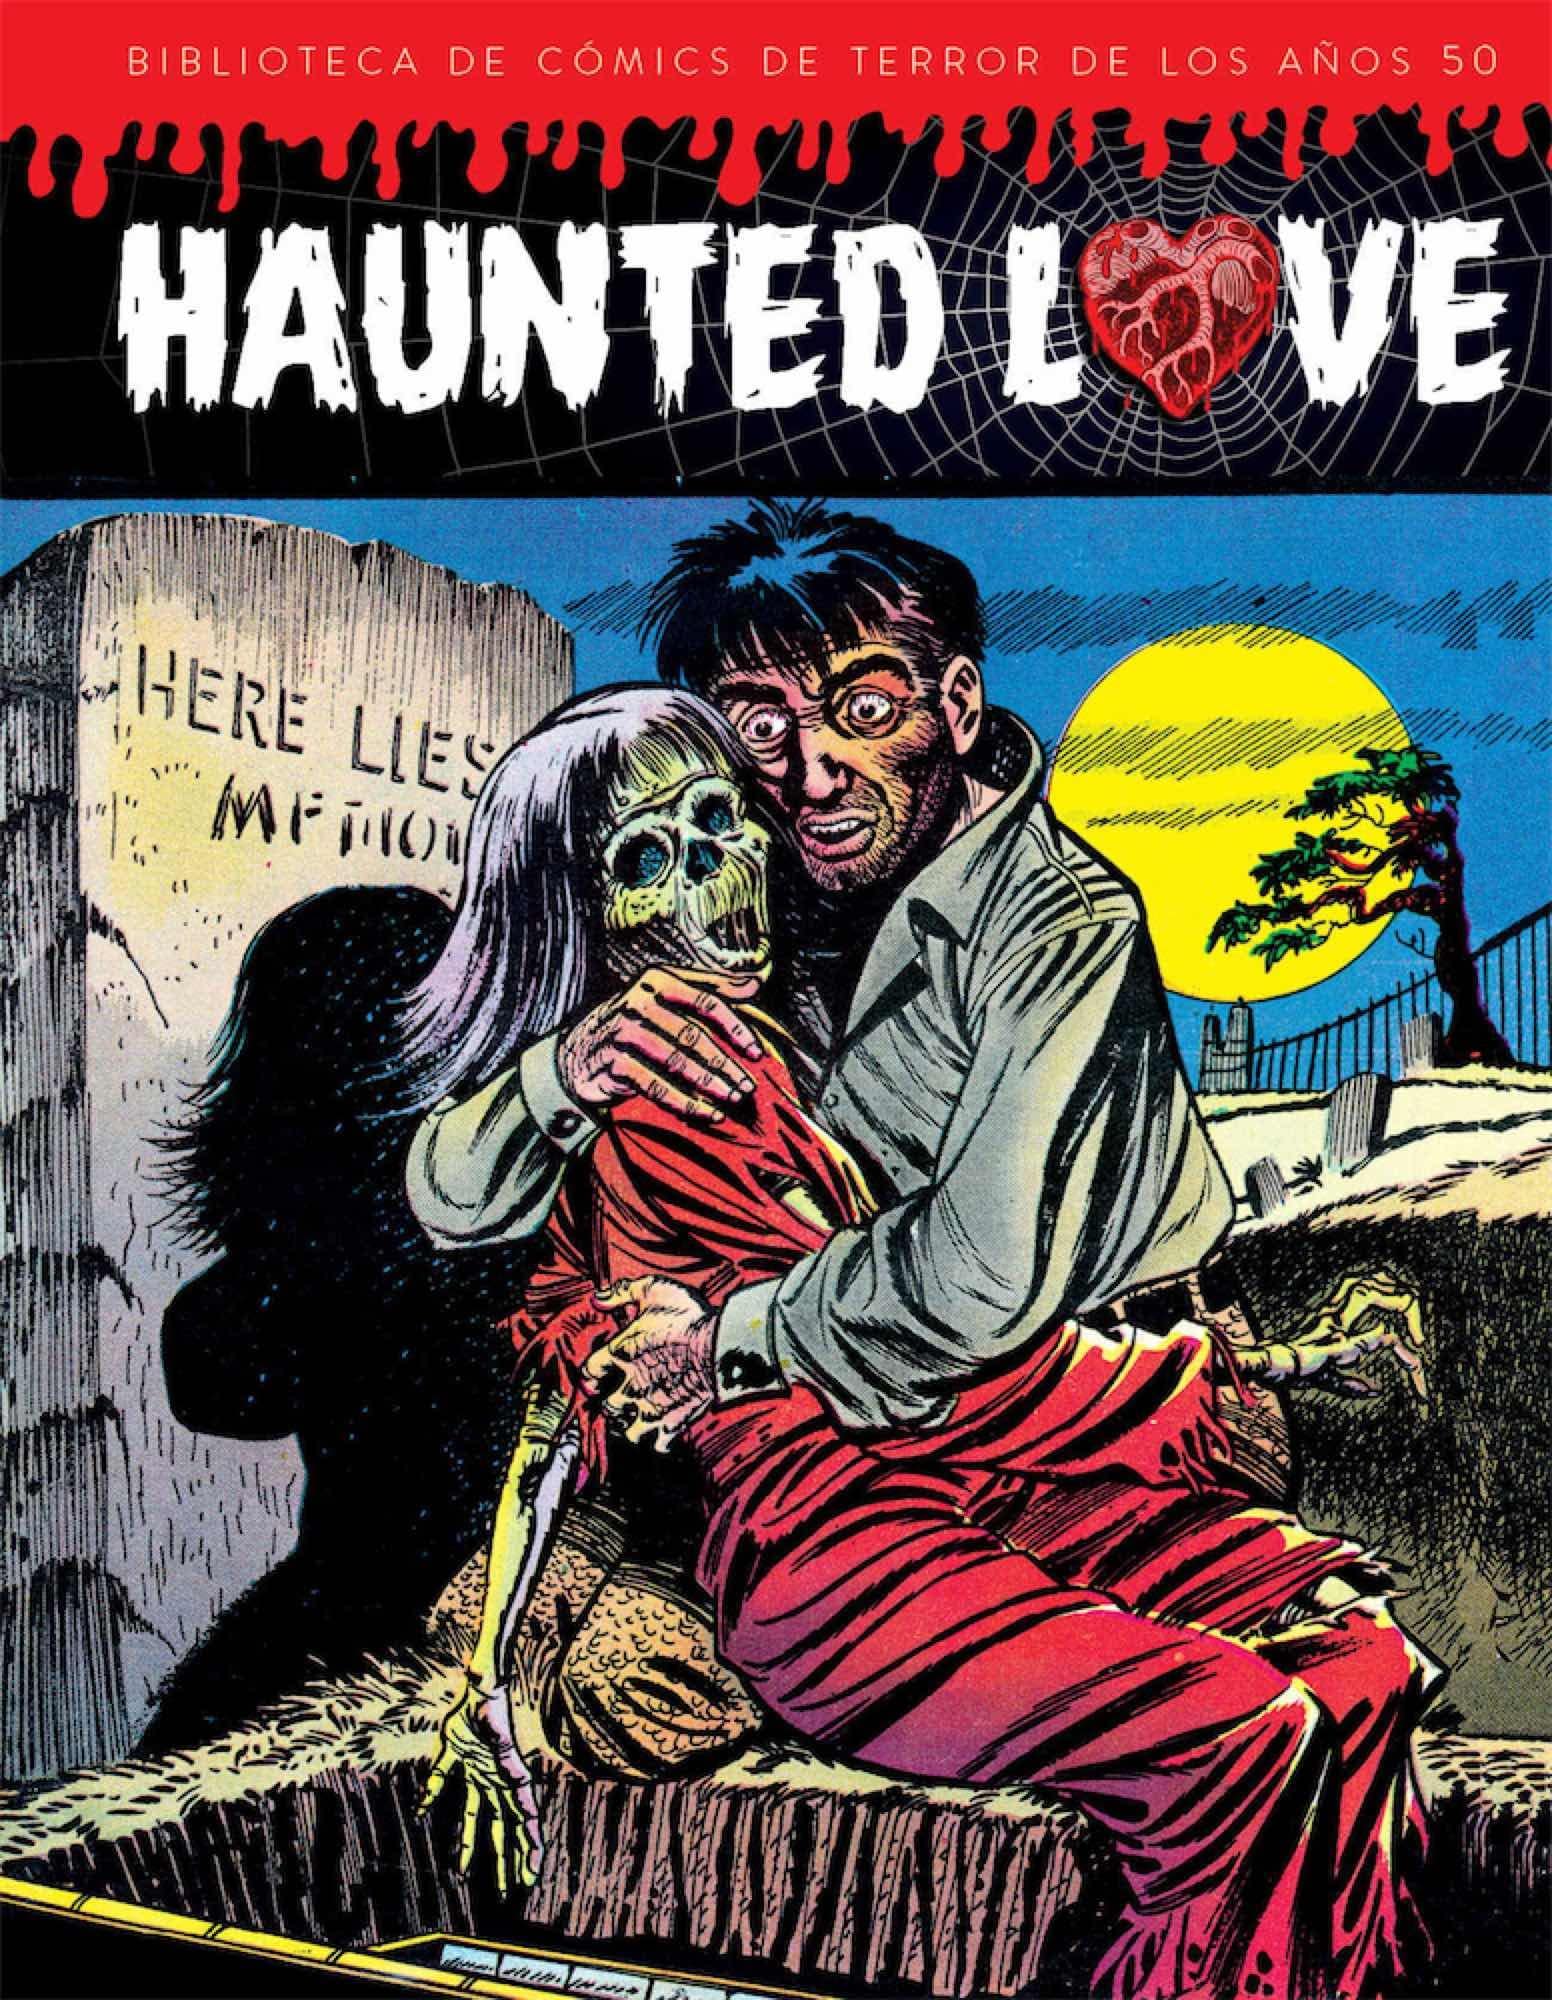  Libro - Haunted love - edición especial - libro curioso